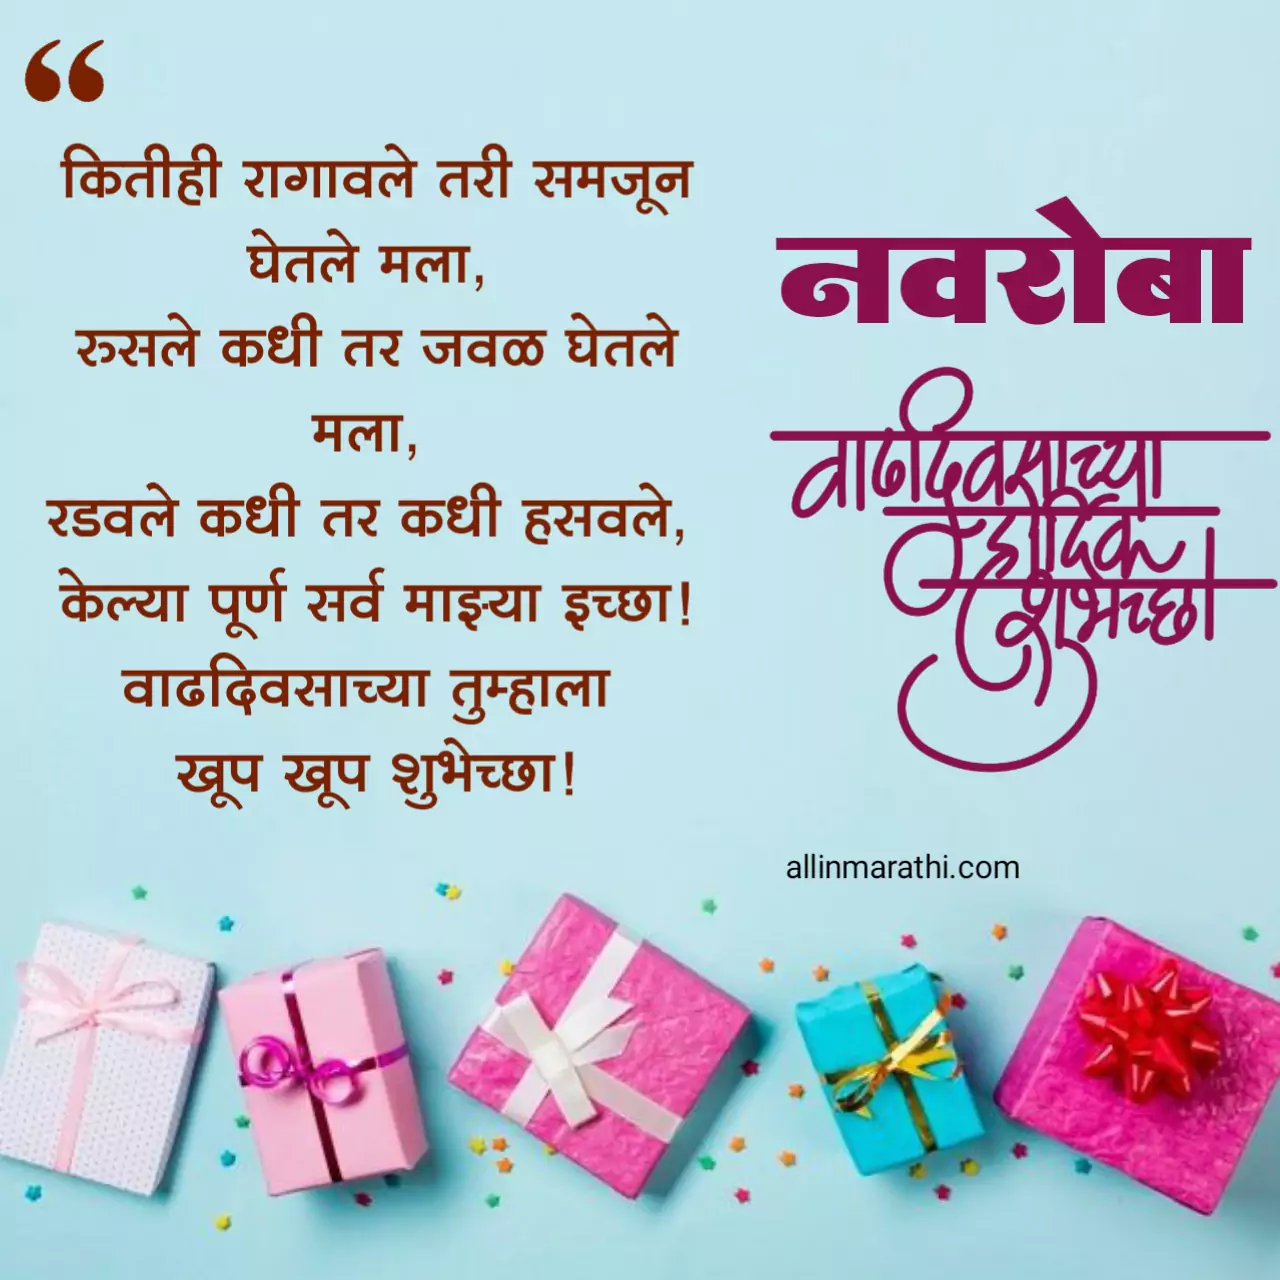 Happy Birthday wishes for husband in marathi